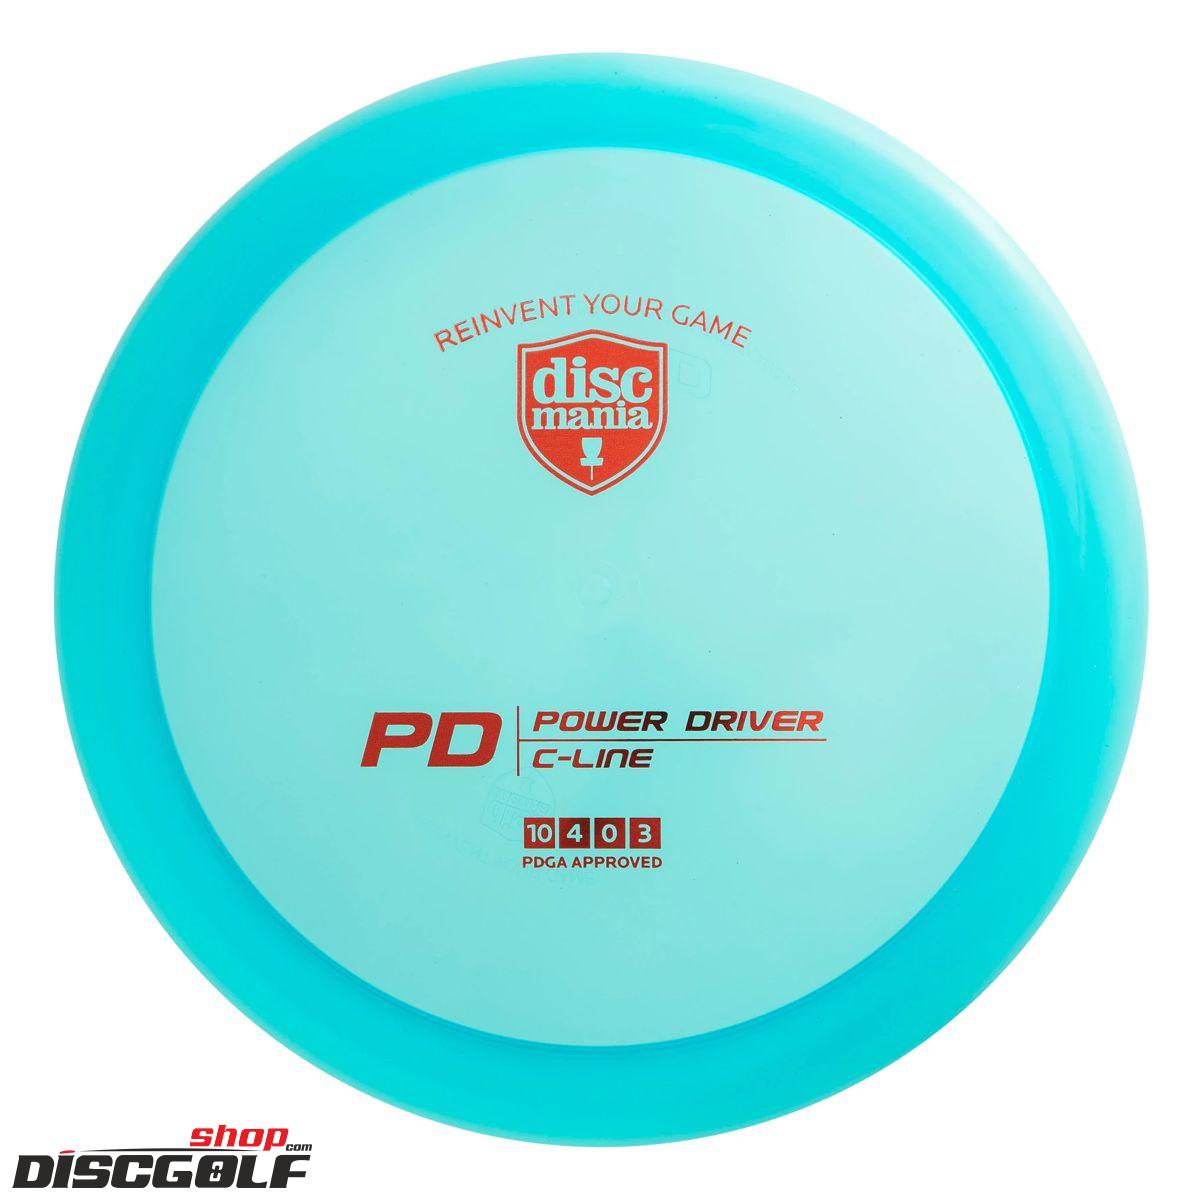 Discmania PD C-Line (discgolf)